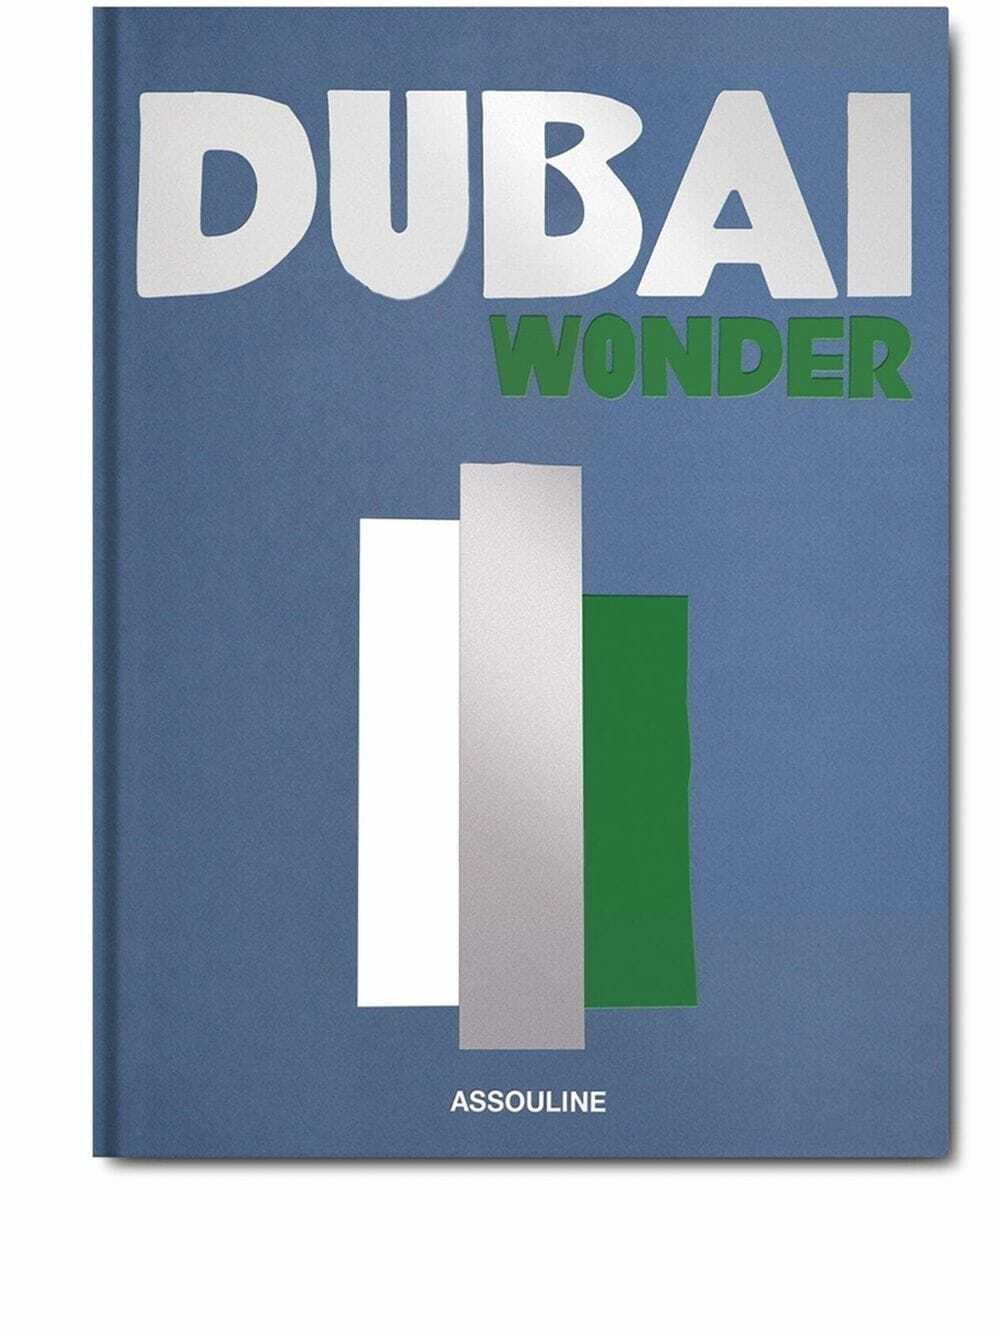 Photo: ASSOULINE - Dubai Wonder Book